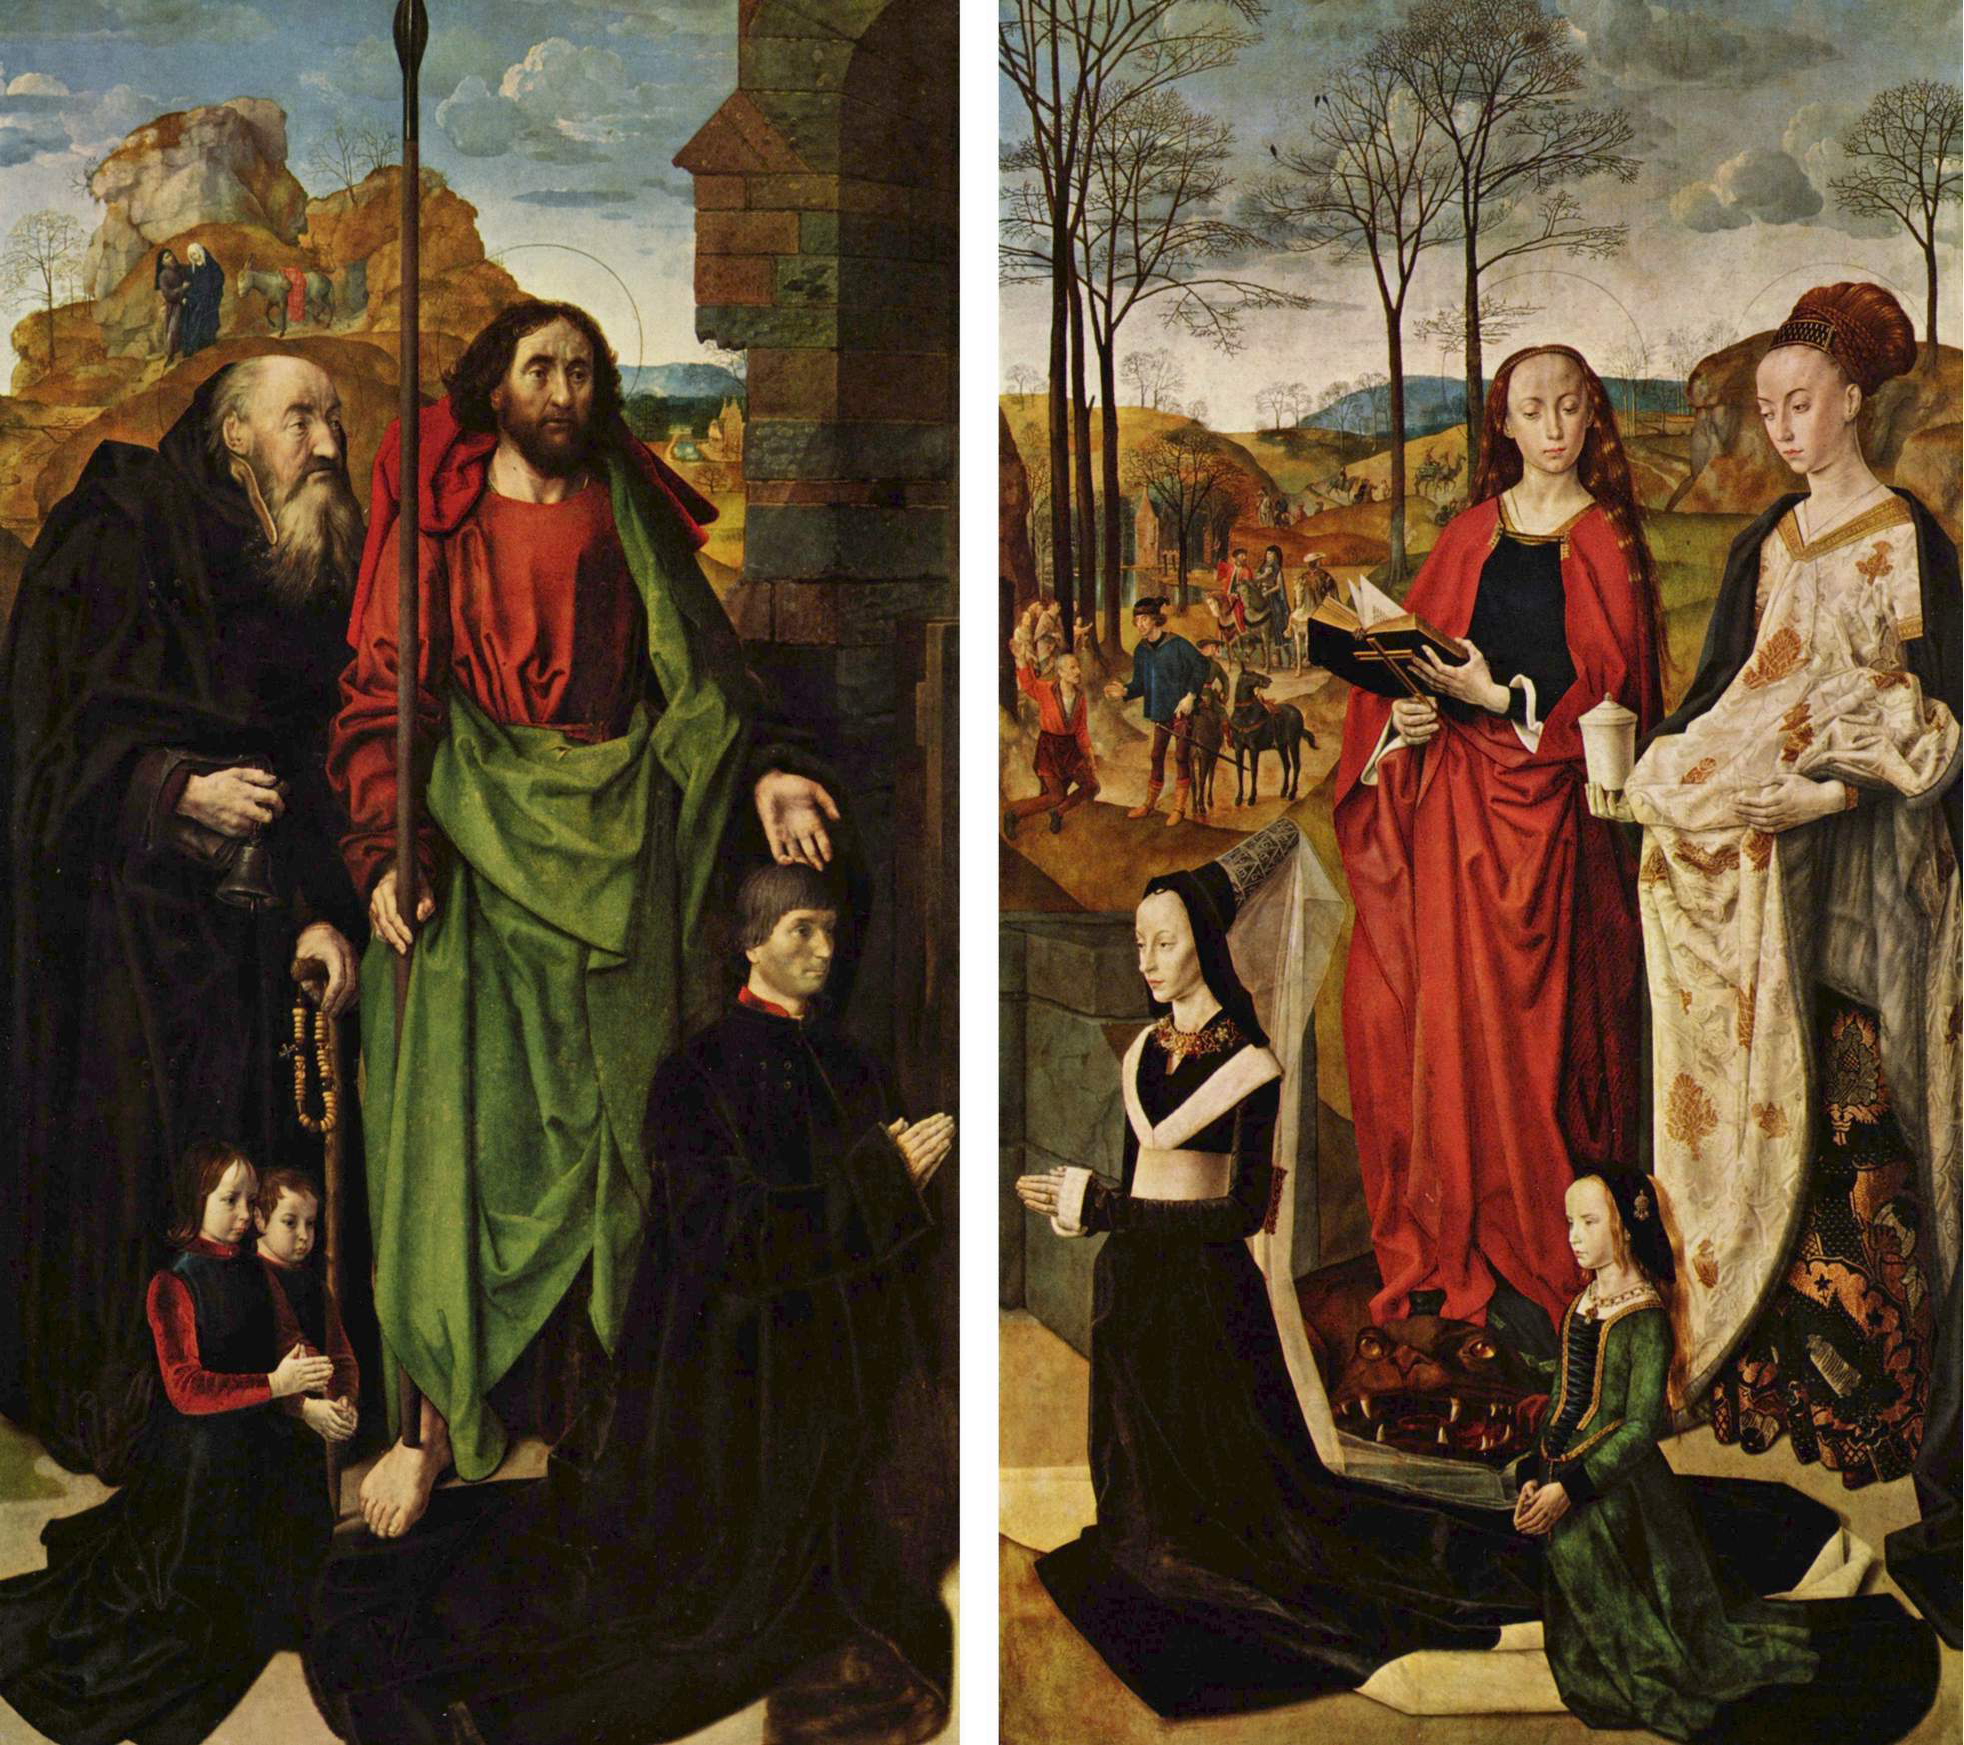 Hugo van der Goes, Portinari Altarpiece, side panels, c. 1476, oil on wood, 274 x 652 cm when open (Uffizi)